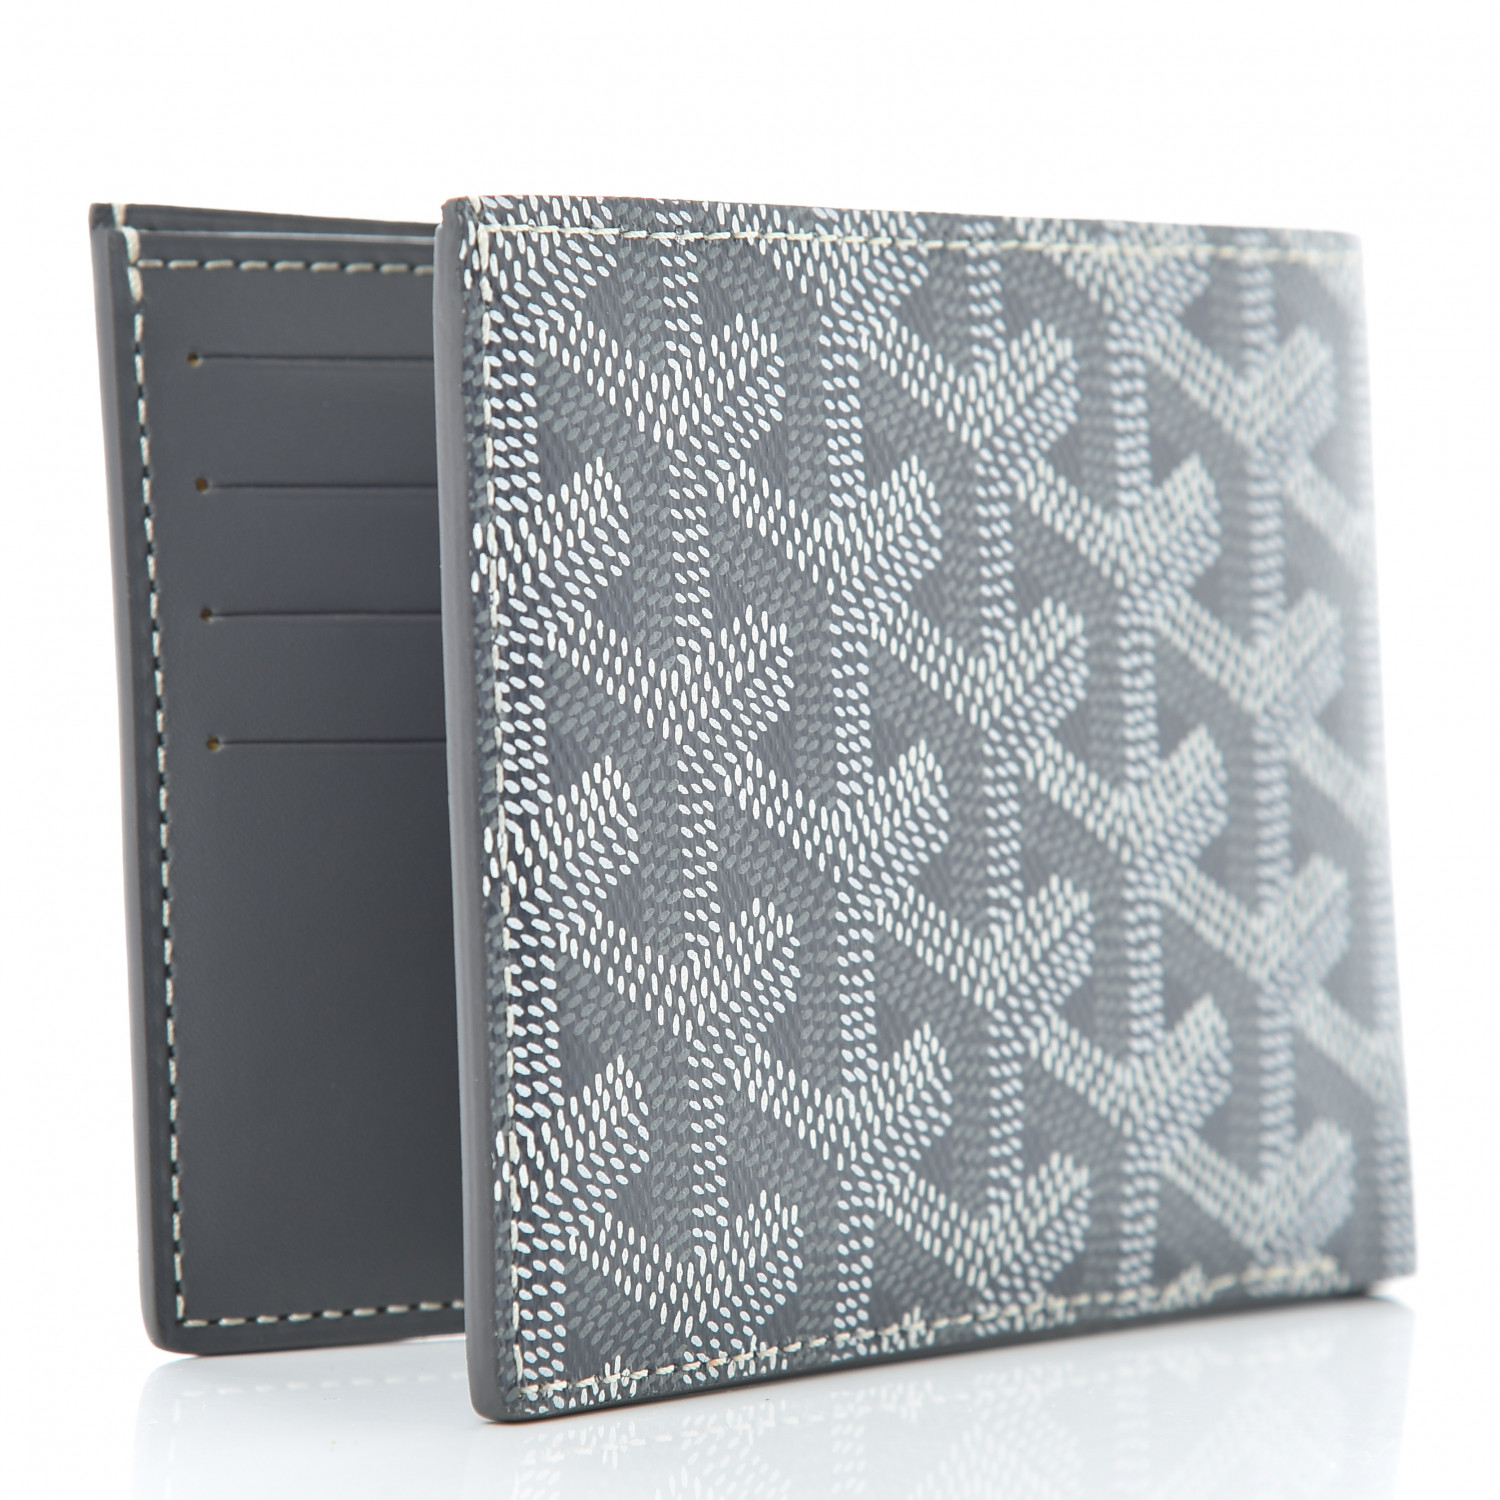 gray goyard wallet